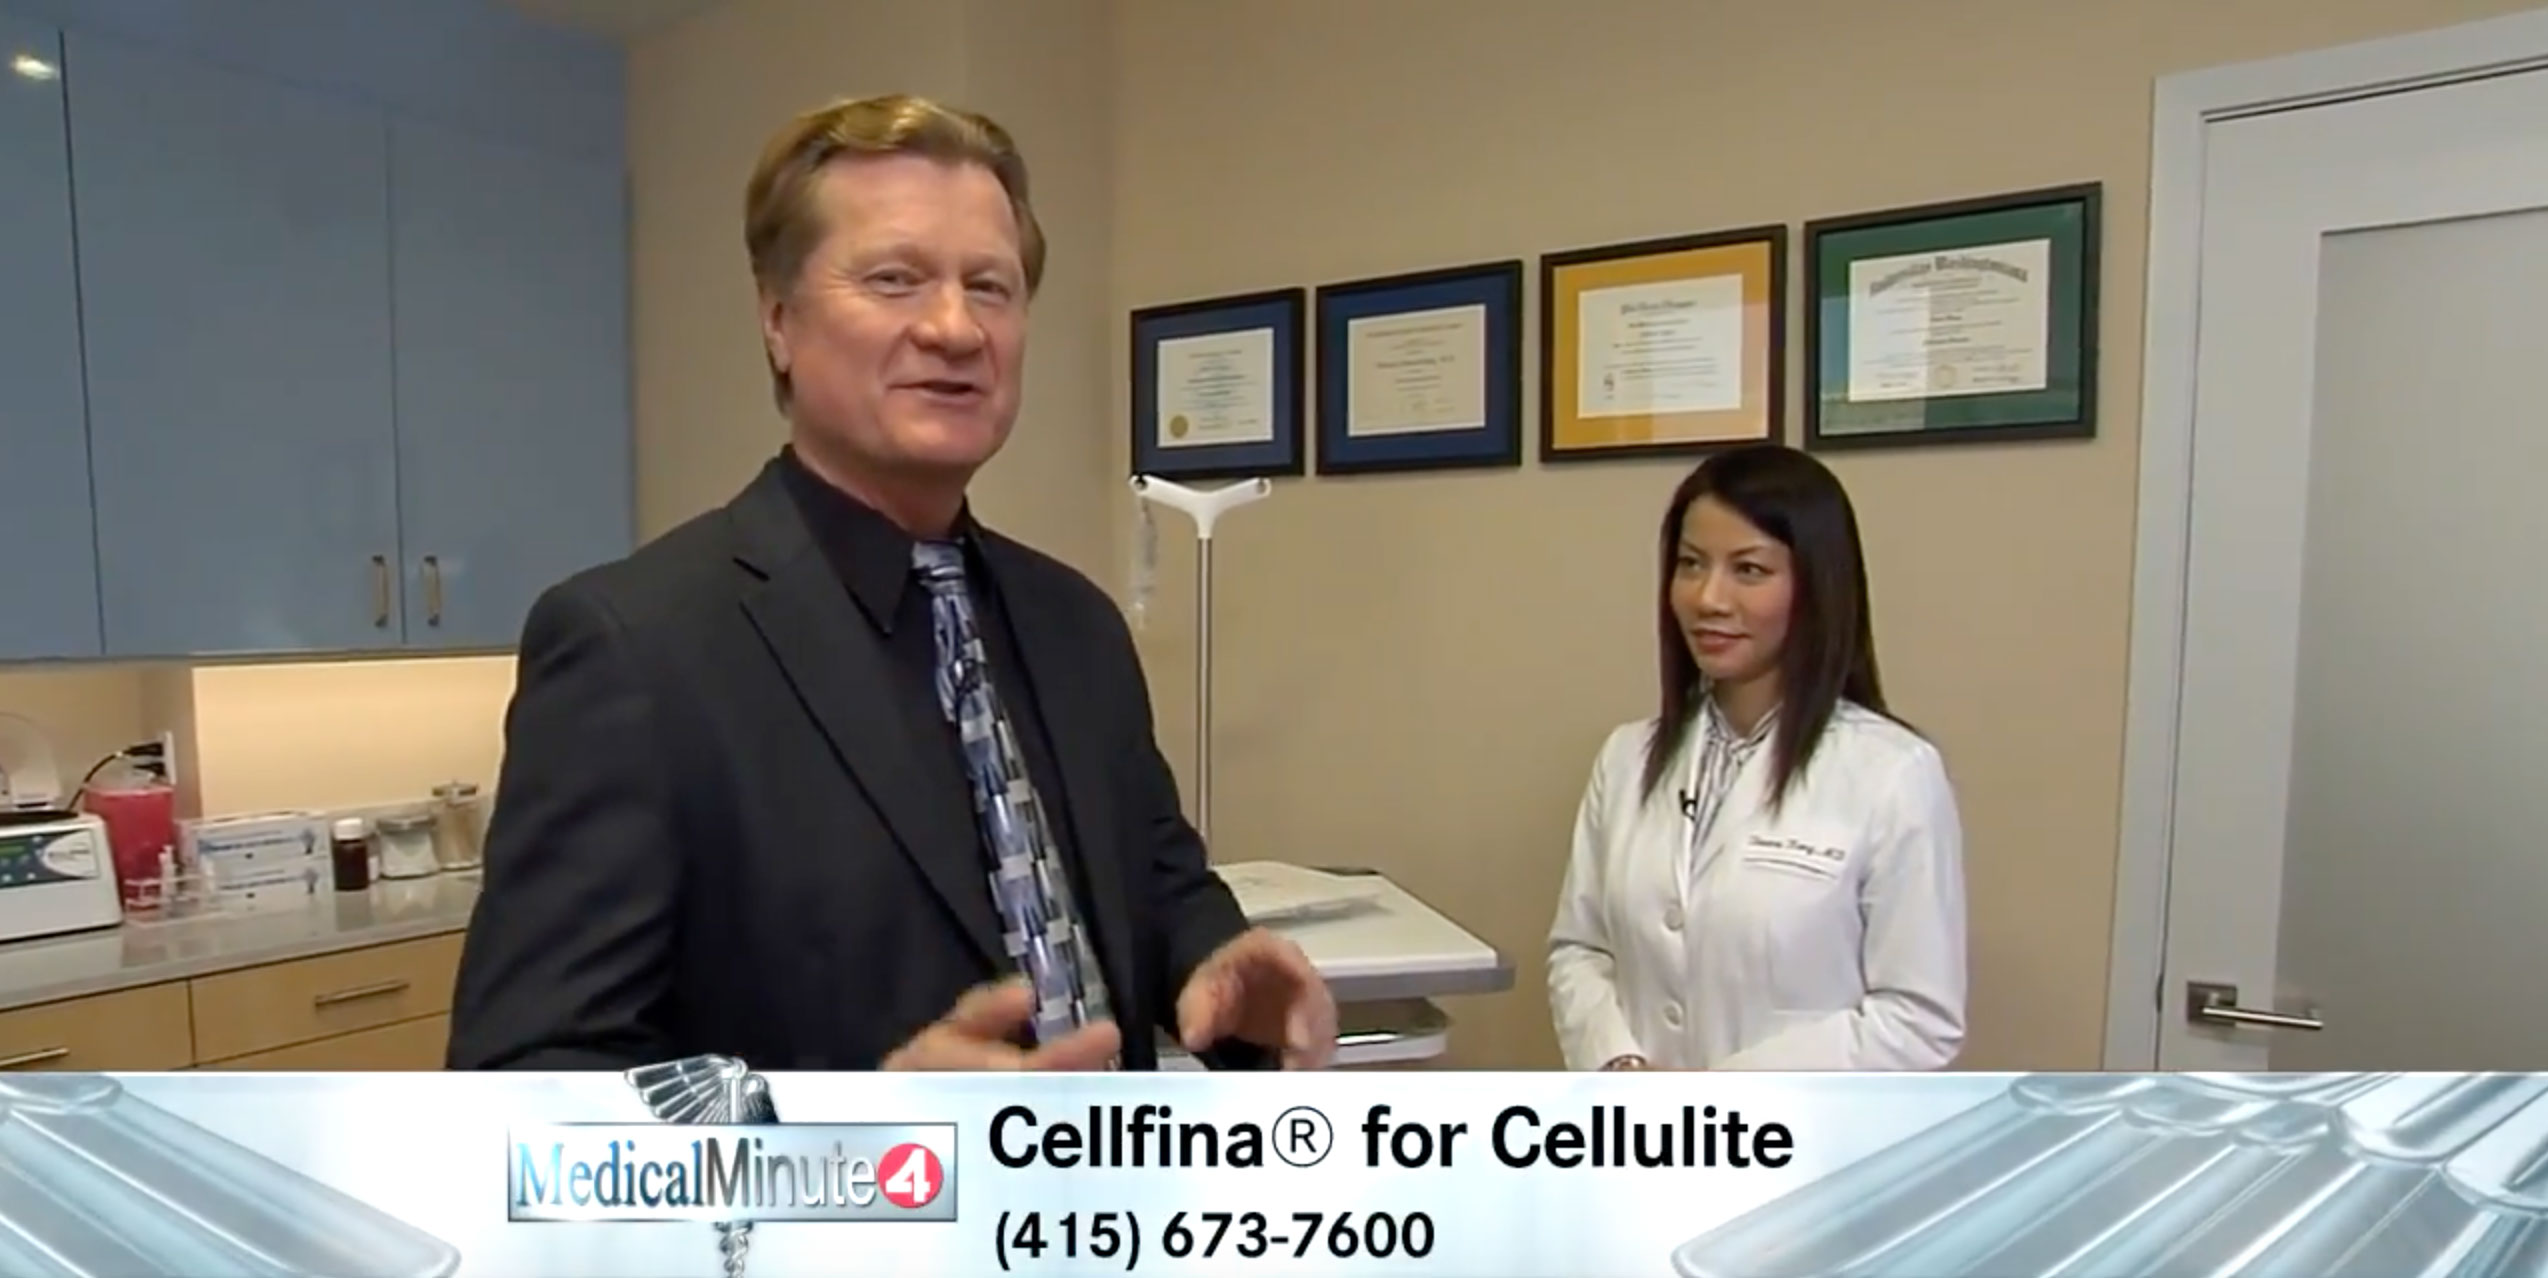 Dr. Kong talking about Cellfina